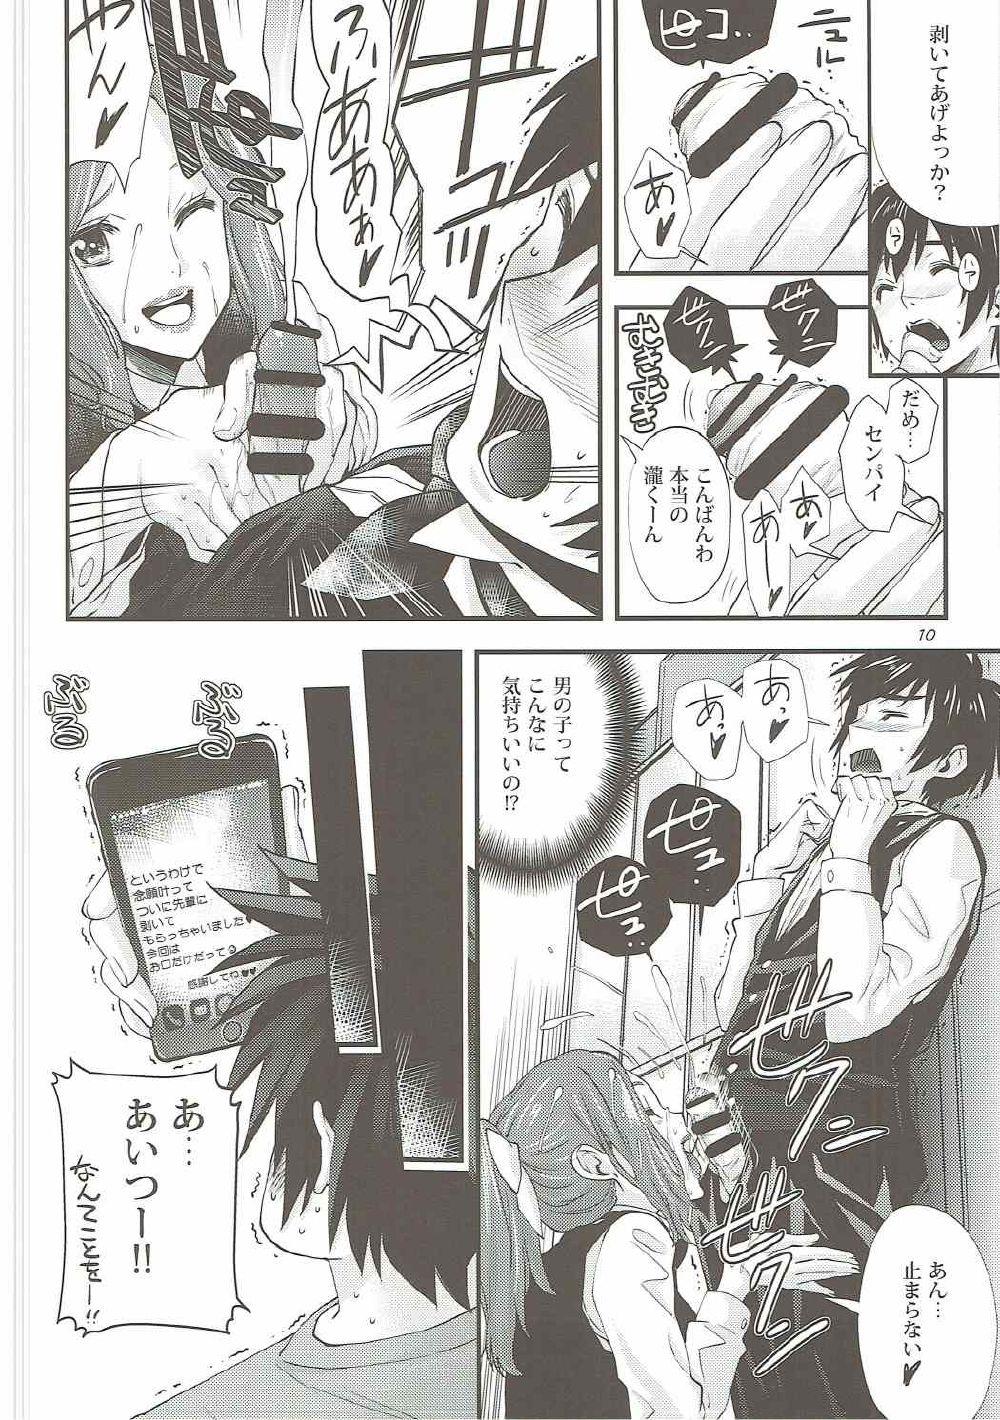 Gaping Shooting star - Kimi no na wa. Hymen - Page 9